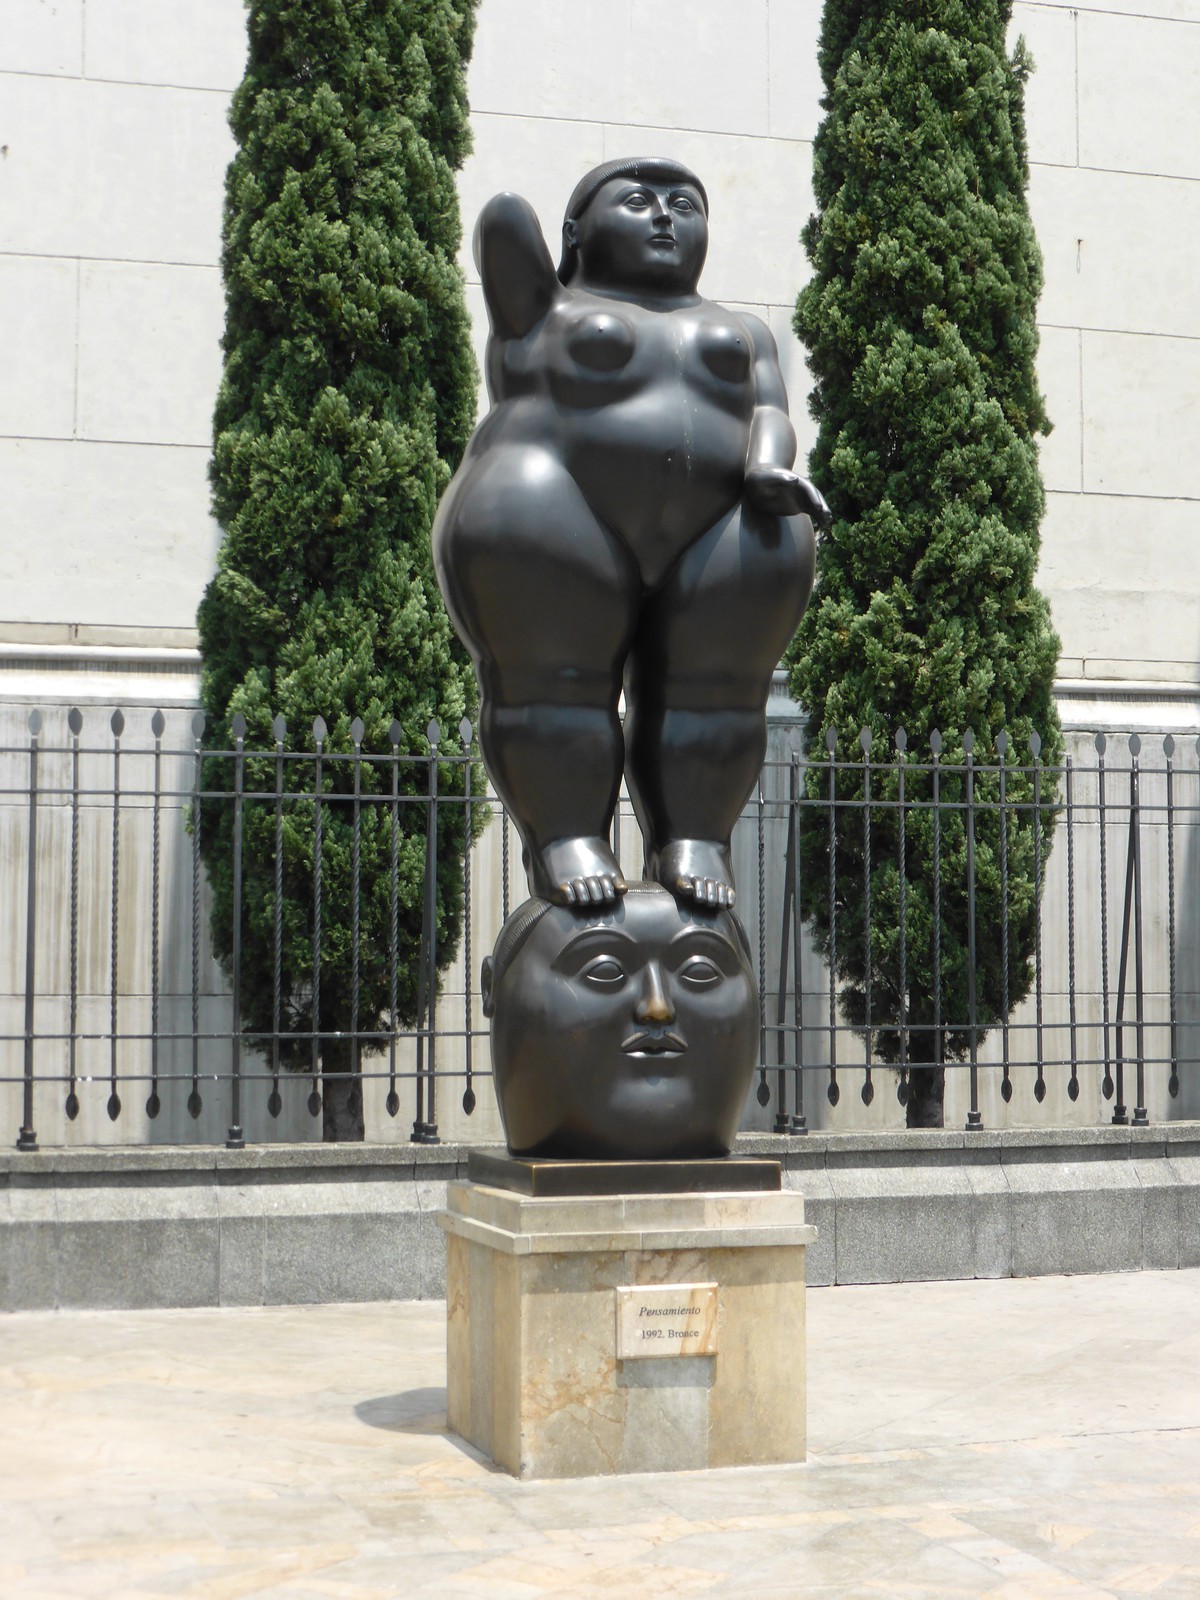 Botero's 1992 sculpture 'Pensamiento' ('Thought')